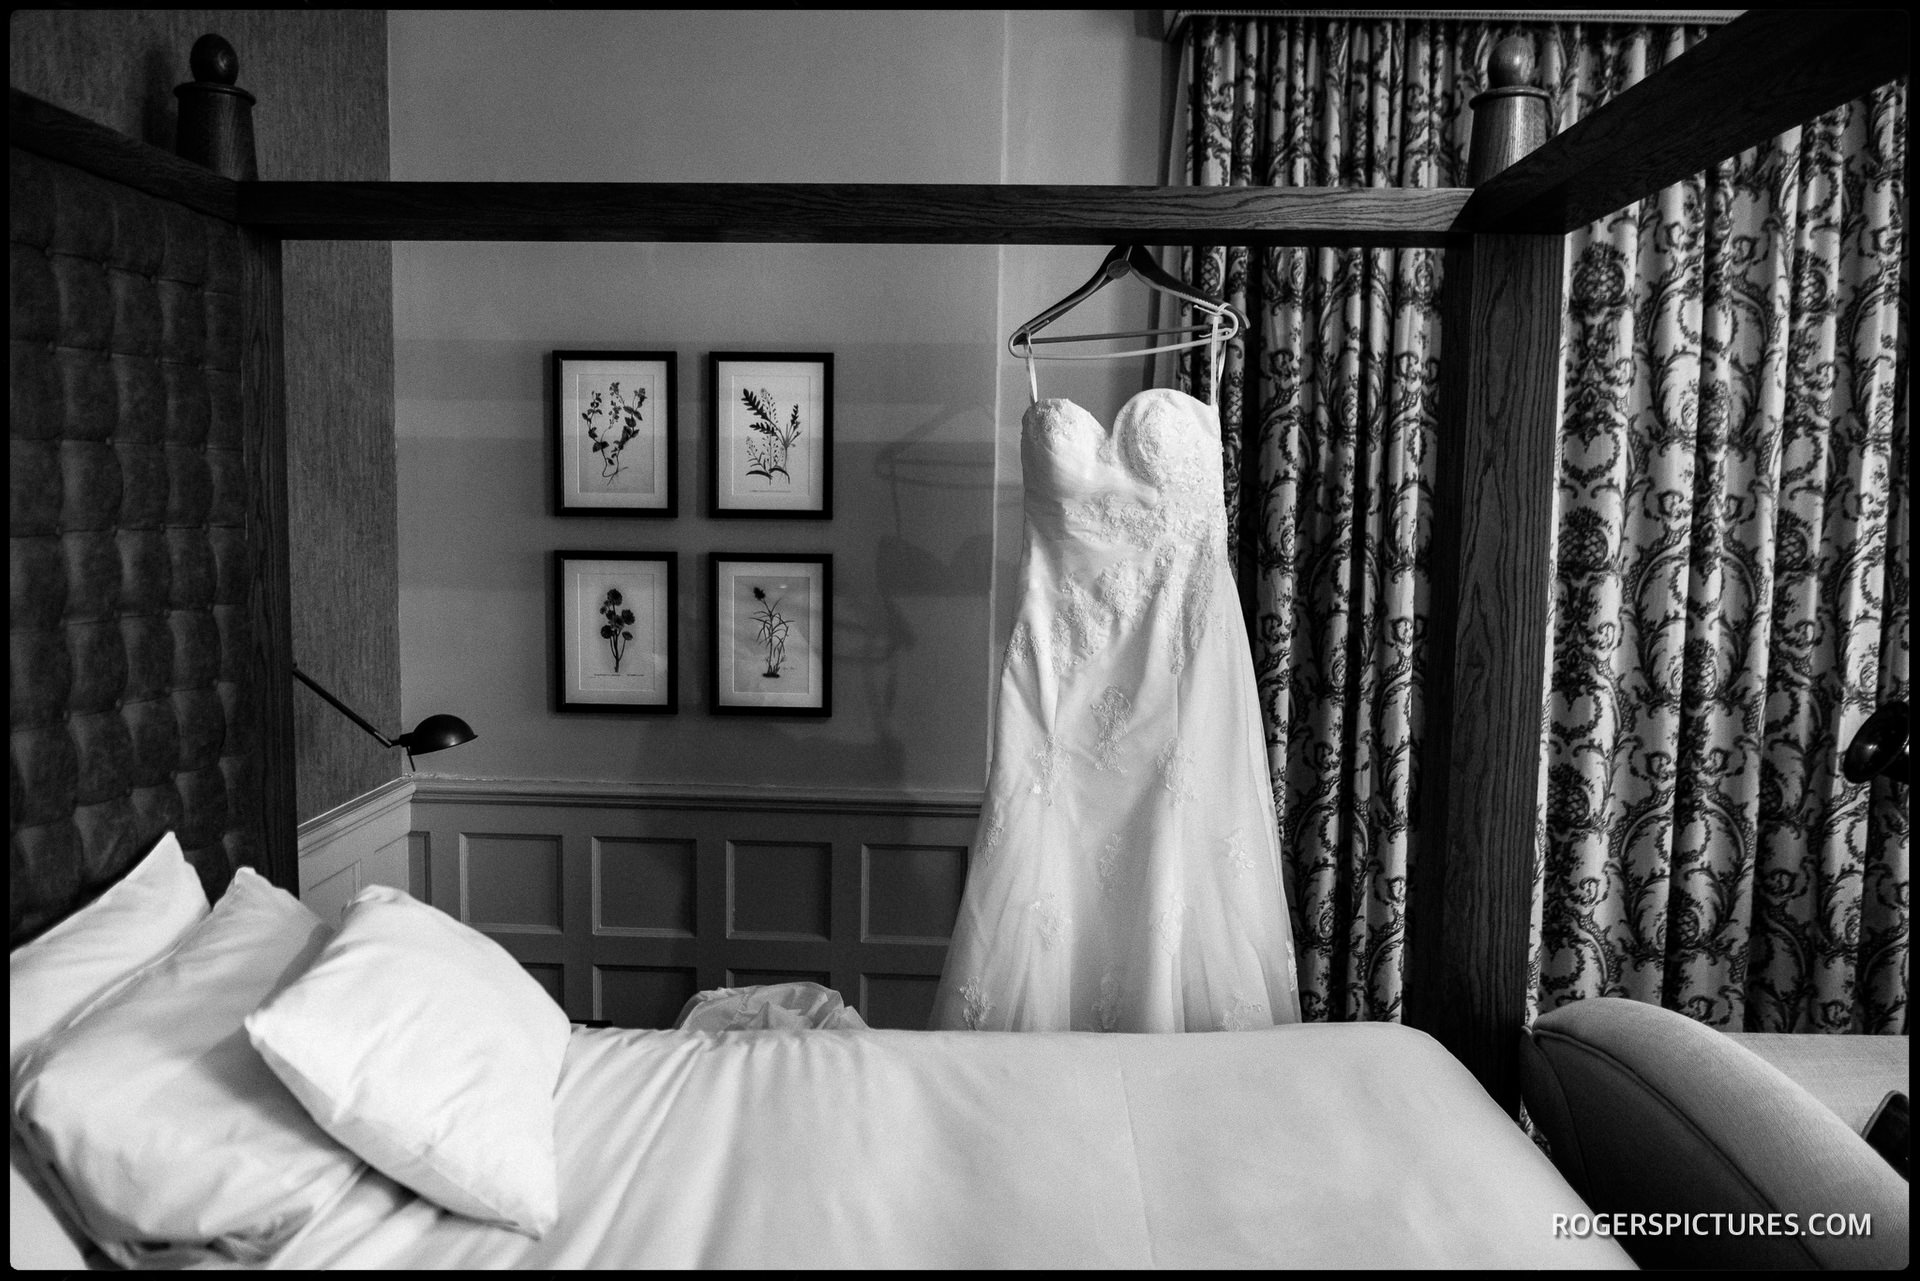 Wedding dress at Wokefield Park hotel in Berkshire